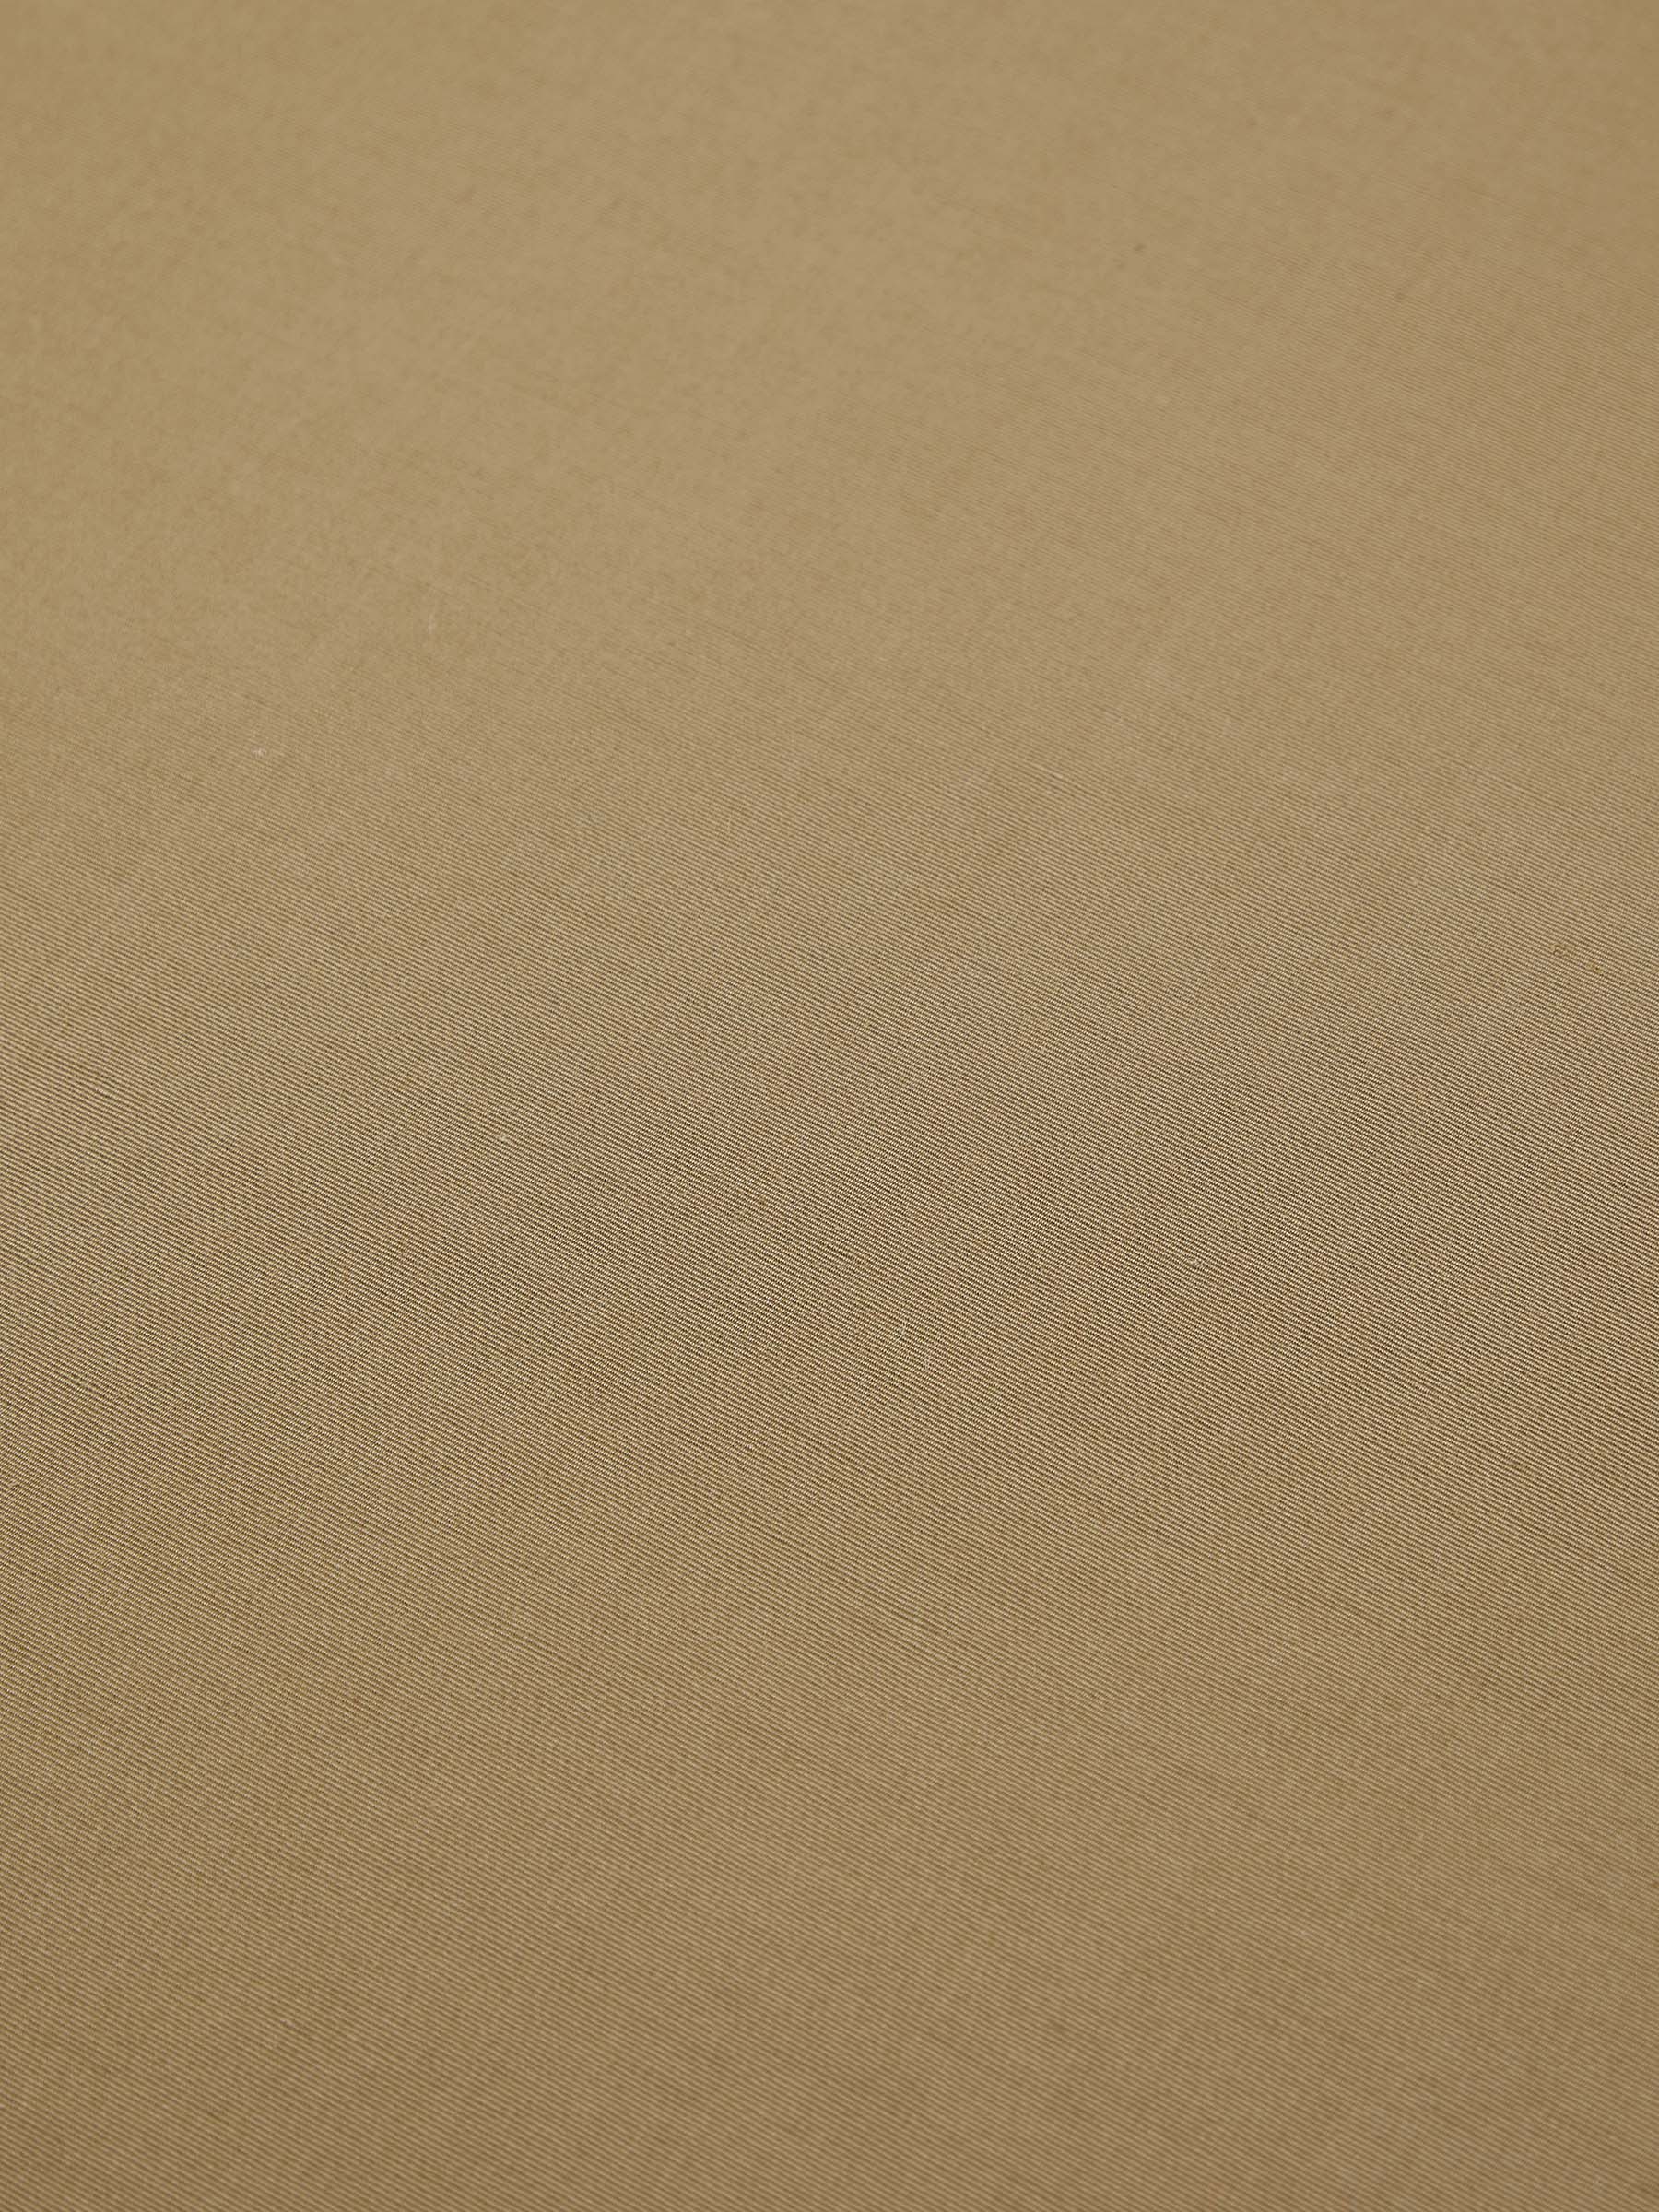 Parchment Cardboard